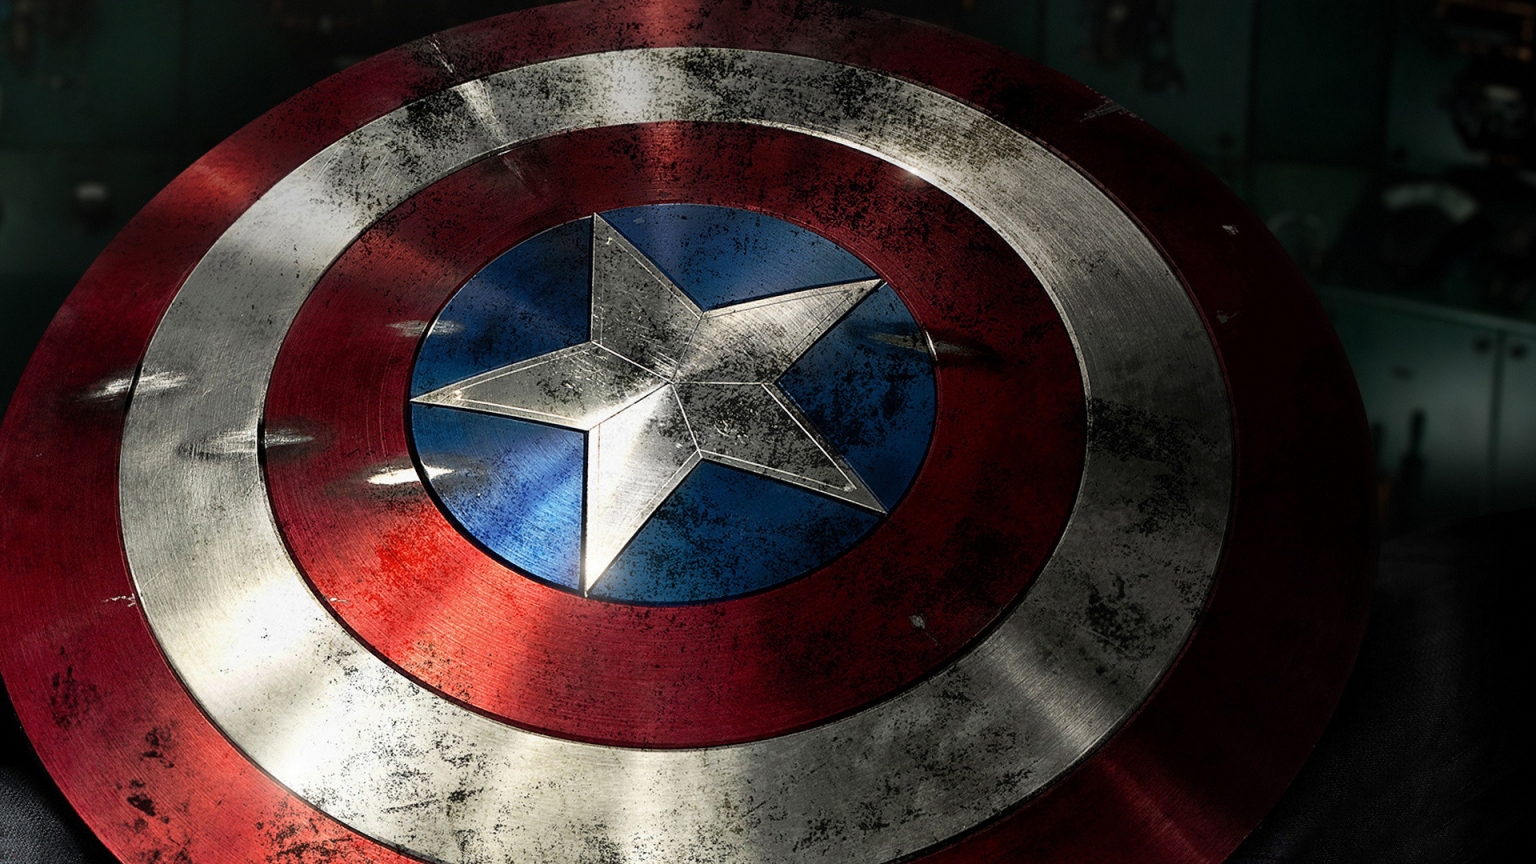 Captain America Shield for 1536 x 864 HDTV resolution